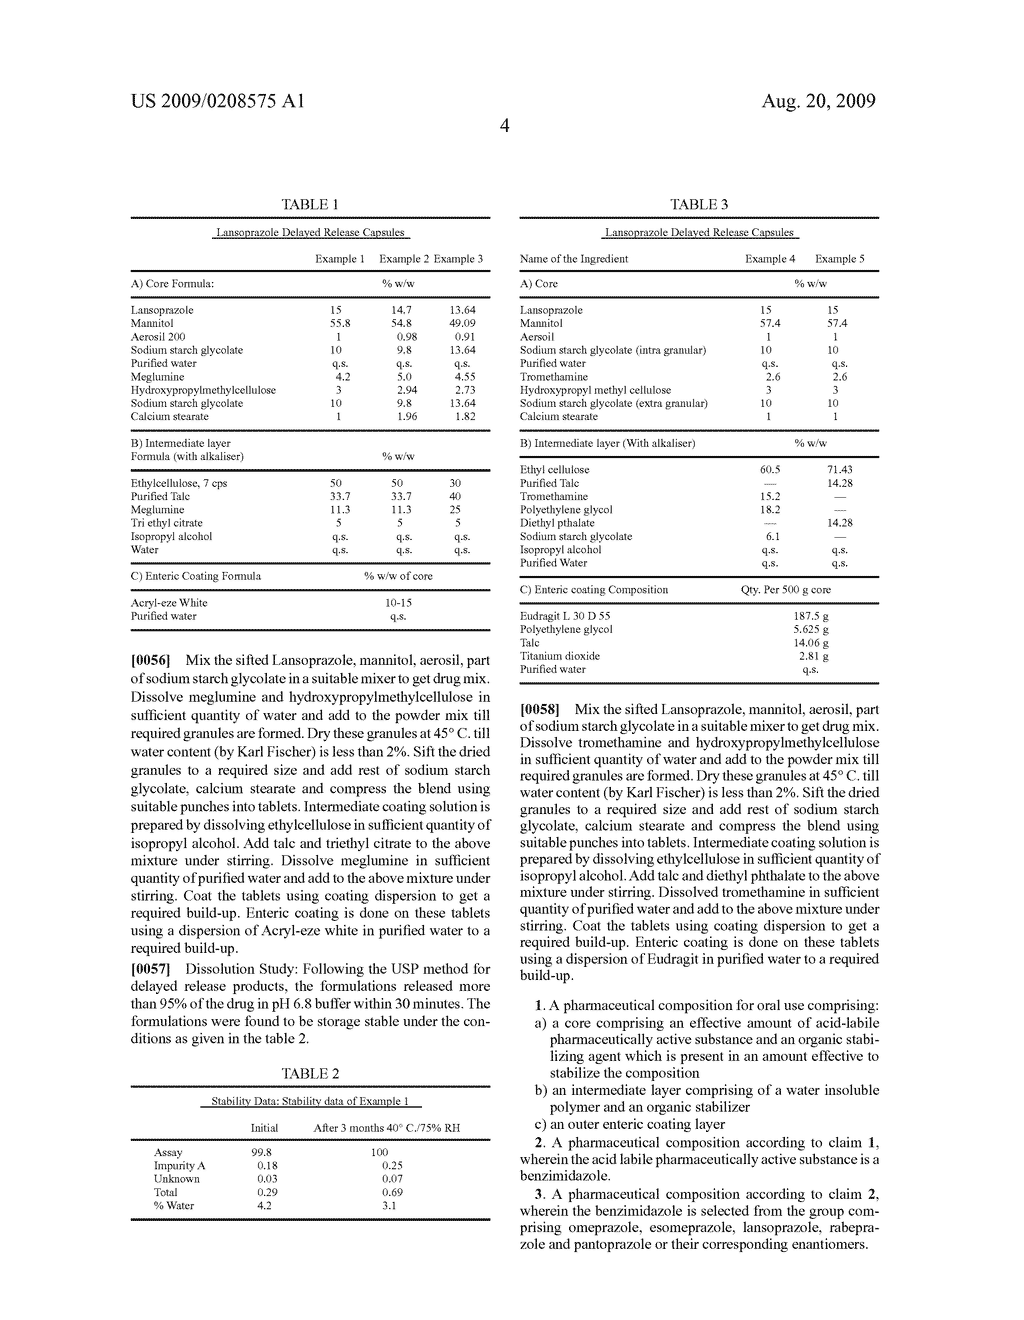 Pharmaceutical Composition Of Acid Labile Substances - diagram, schematic, and image 05